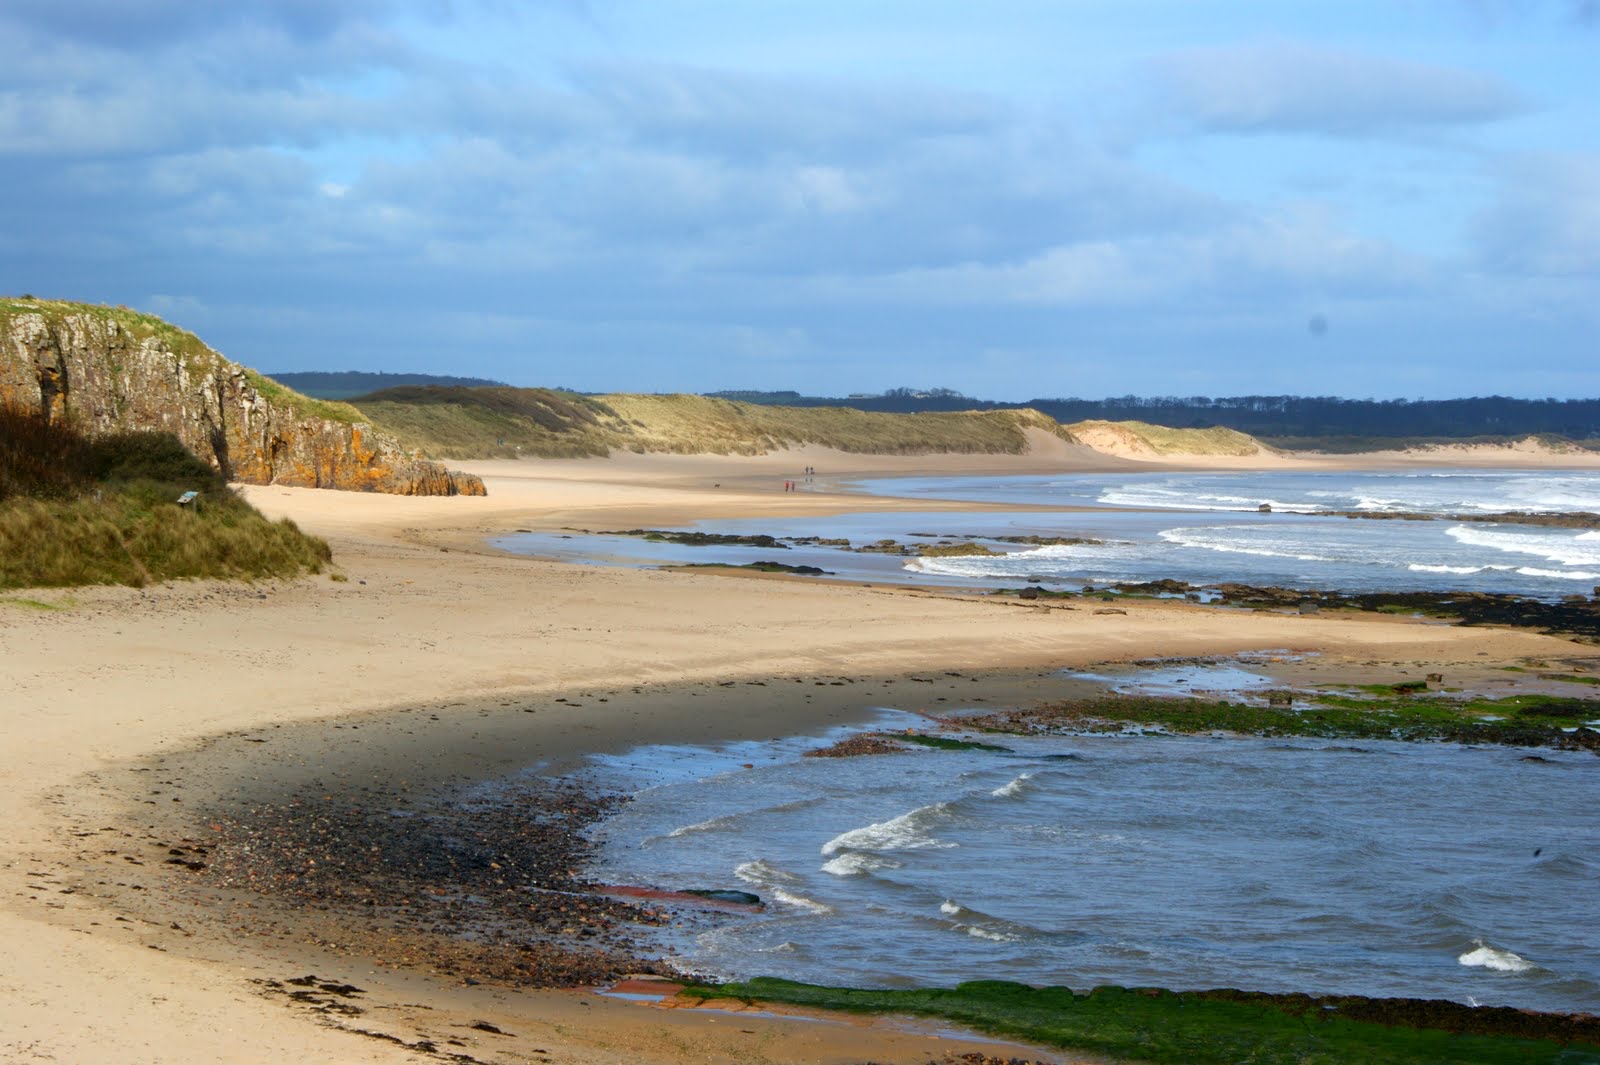 Foto di Spiaggia di Tyninghame ubicato in zona naturale